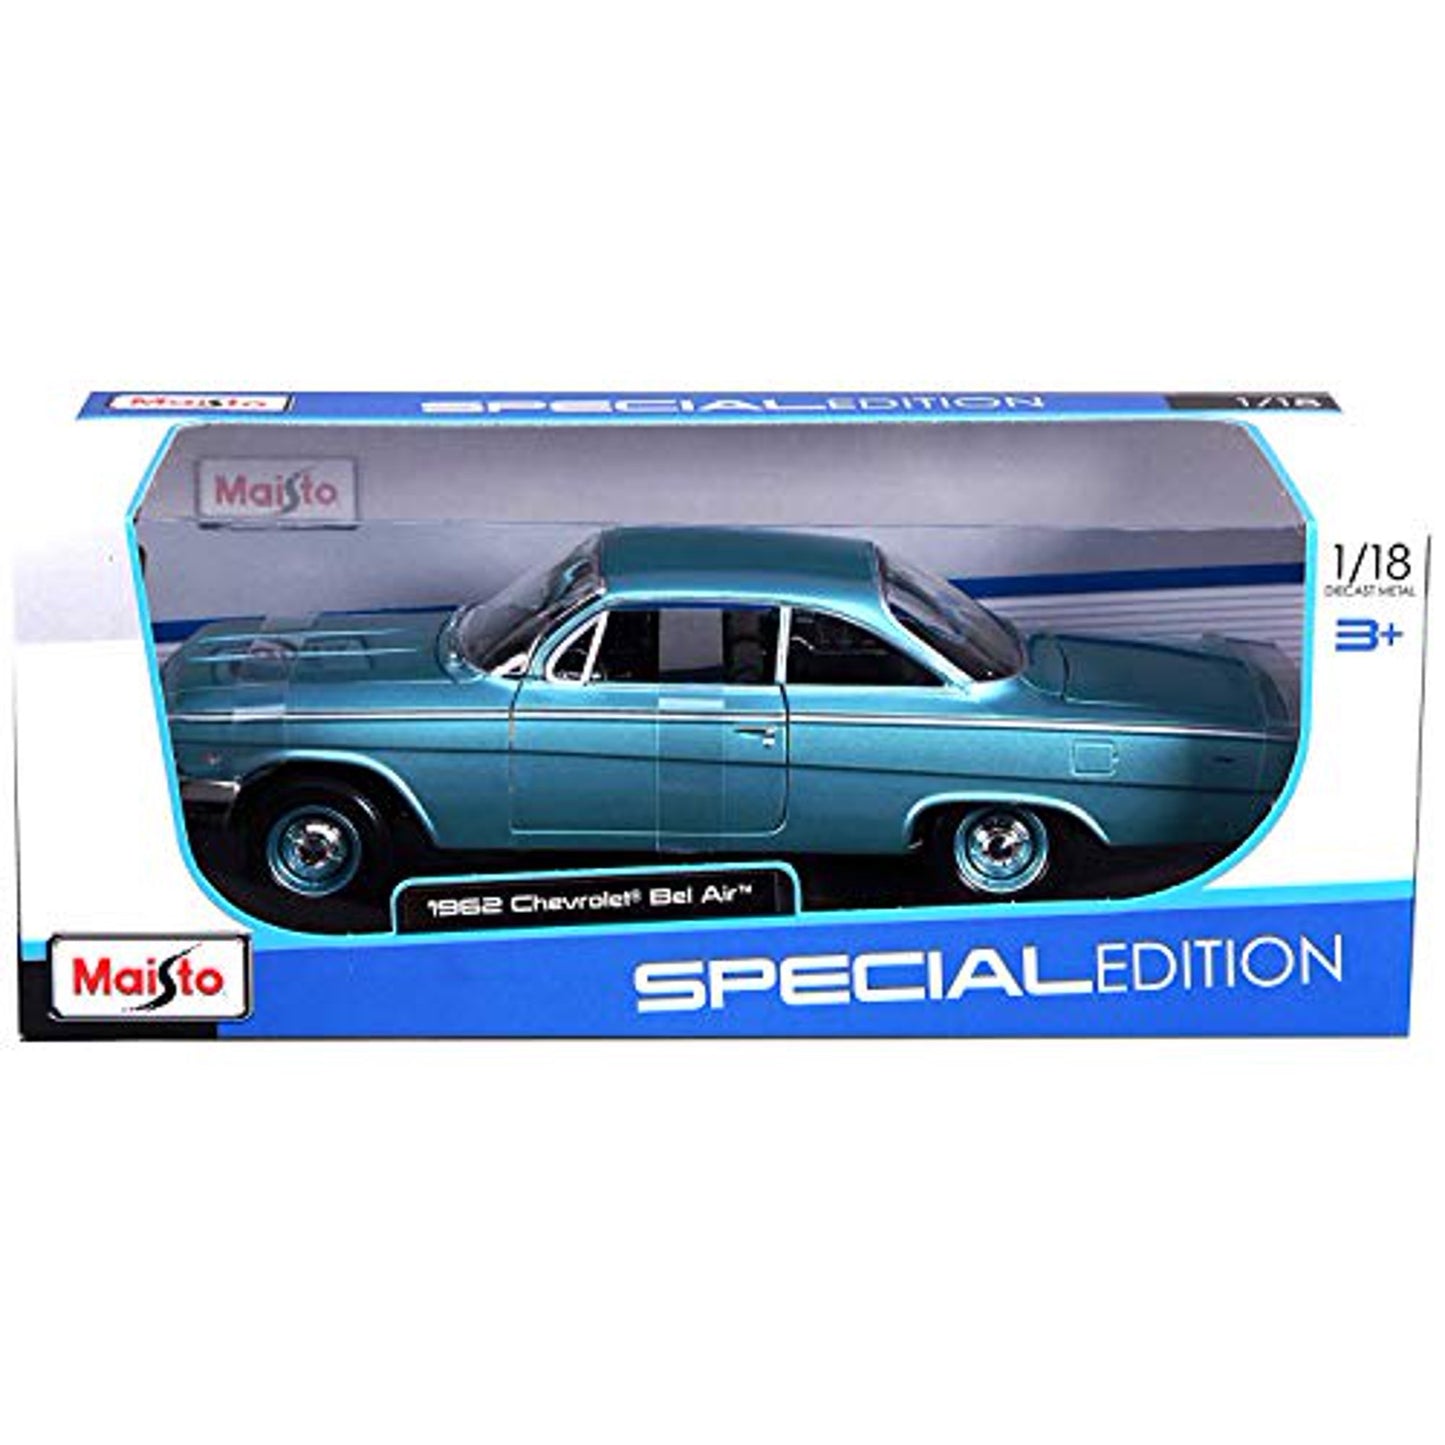 1962 Chevrolet Bel Air Light blue 1/18 Diecast Model car by Maisto